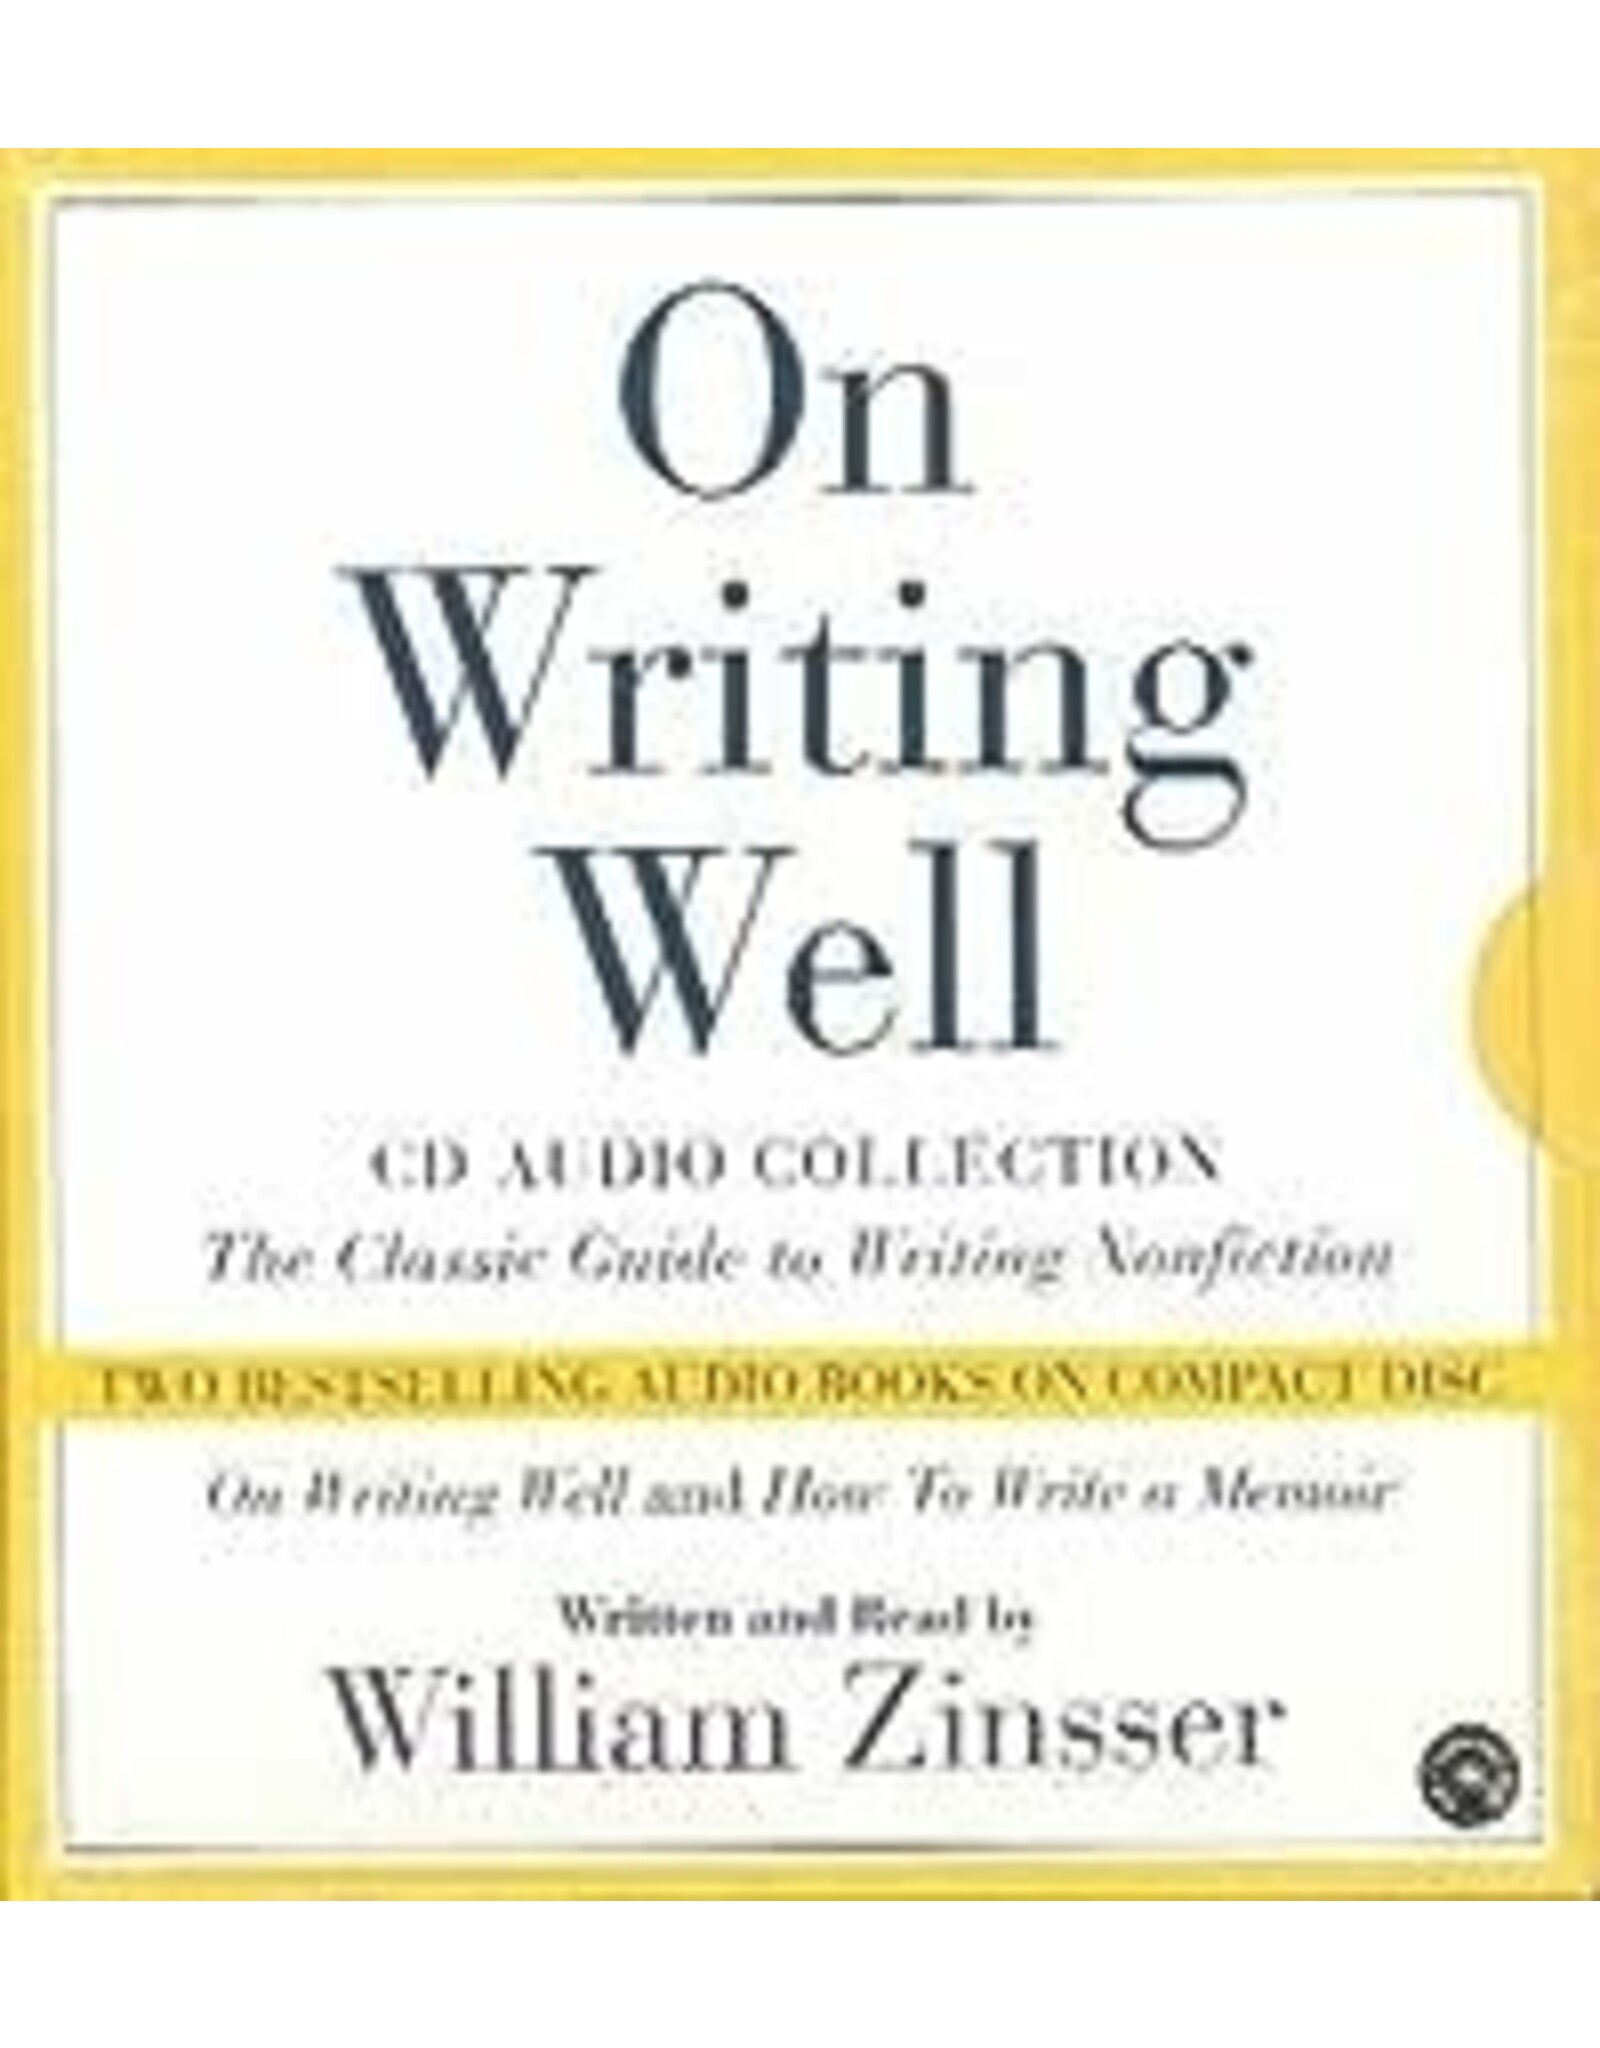 William Zinsser On Writing Well CD